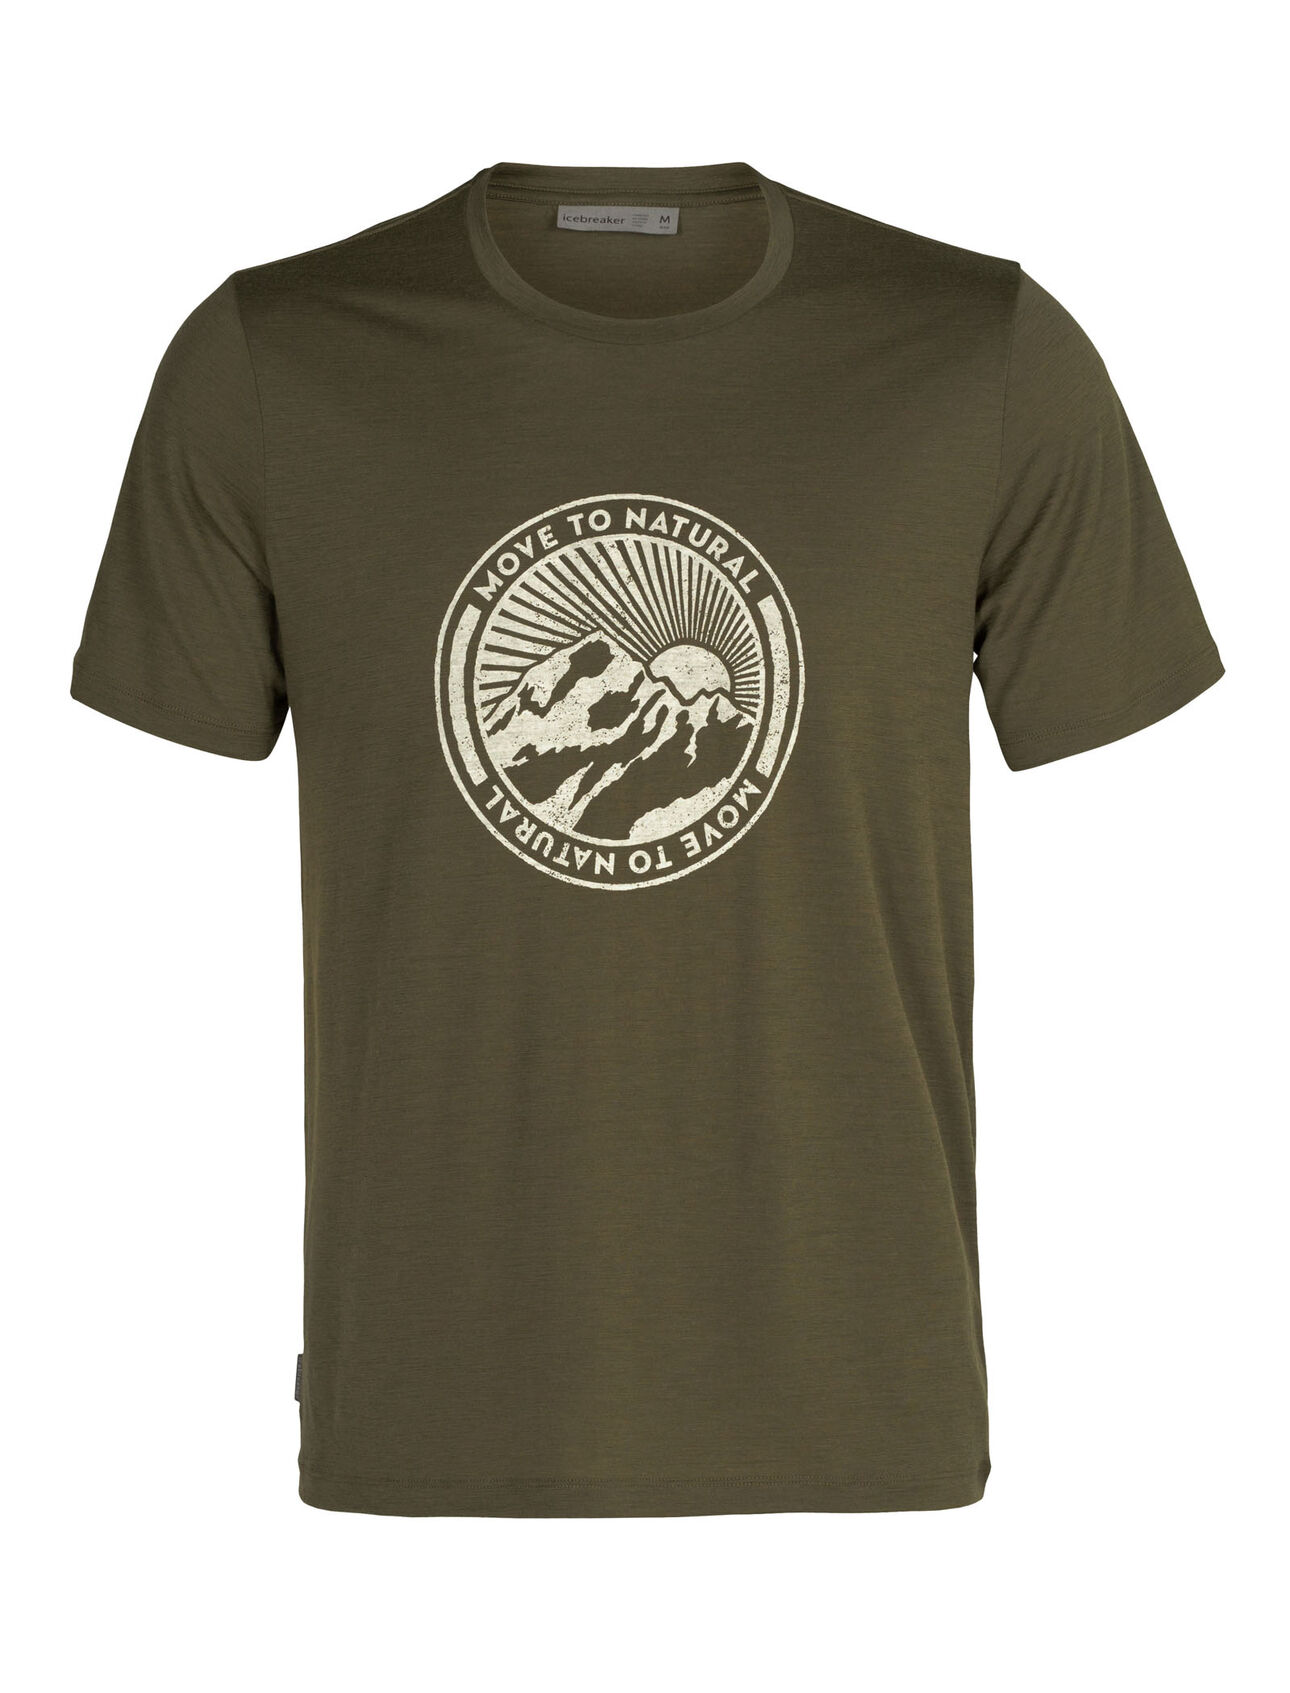 T-shirt manches courtes mérinos Tech Lite II Move to Natural Mountain